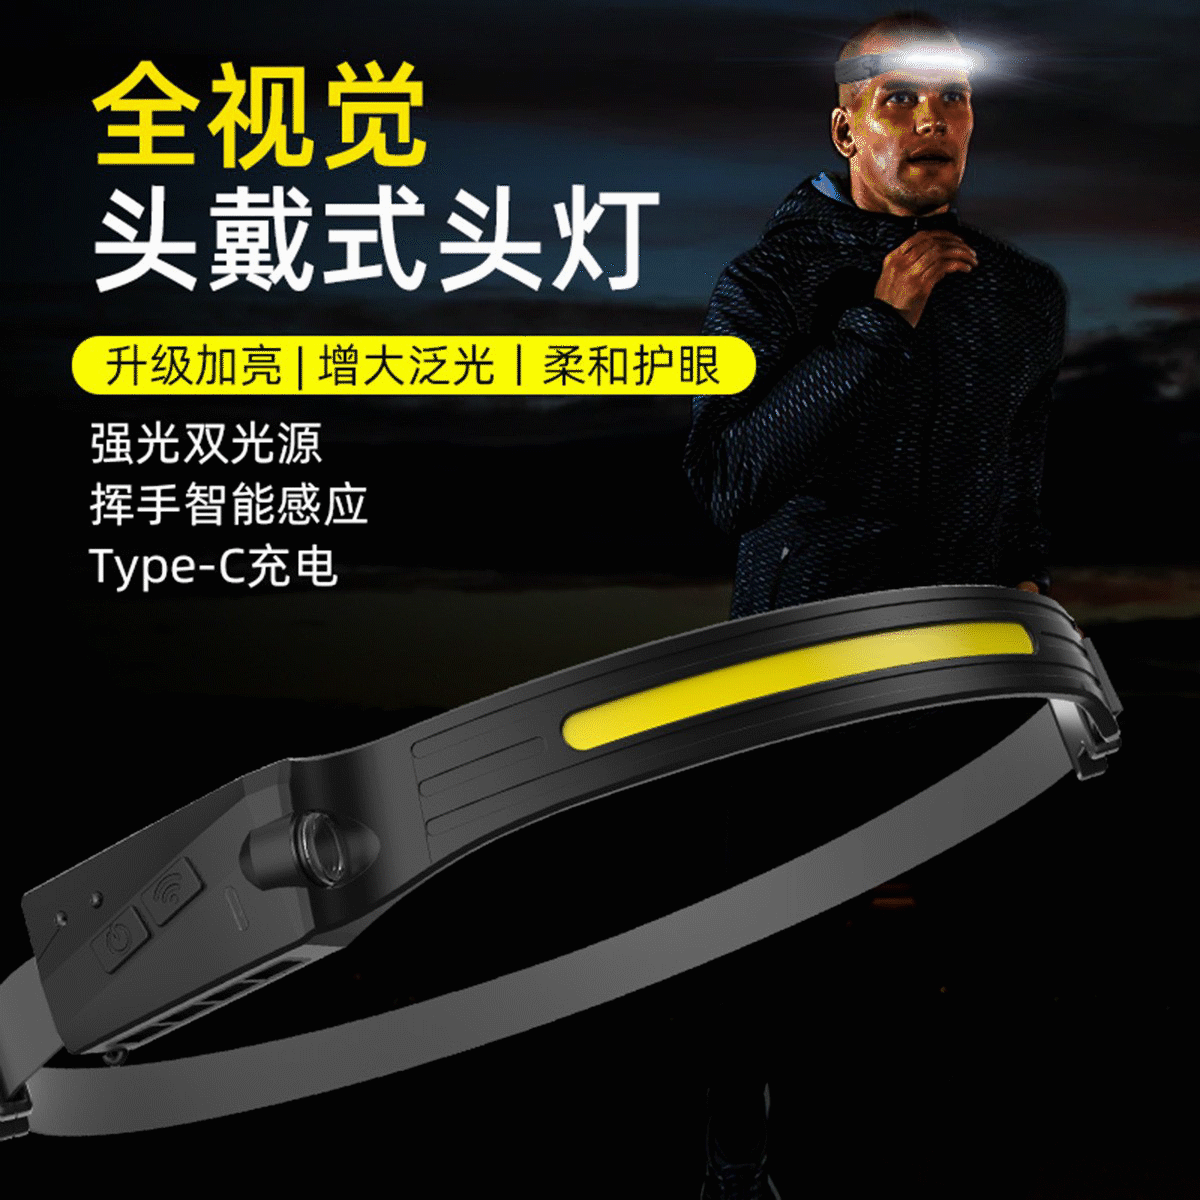 New Wave Induction Cob Headlight Outdoor Riding Light USB Charging Night Fishing Run Light LED Headlight